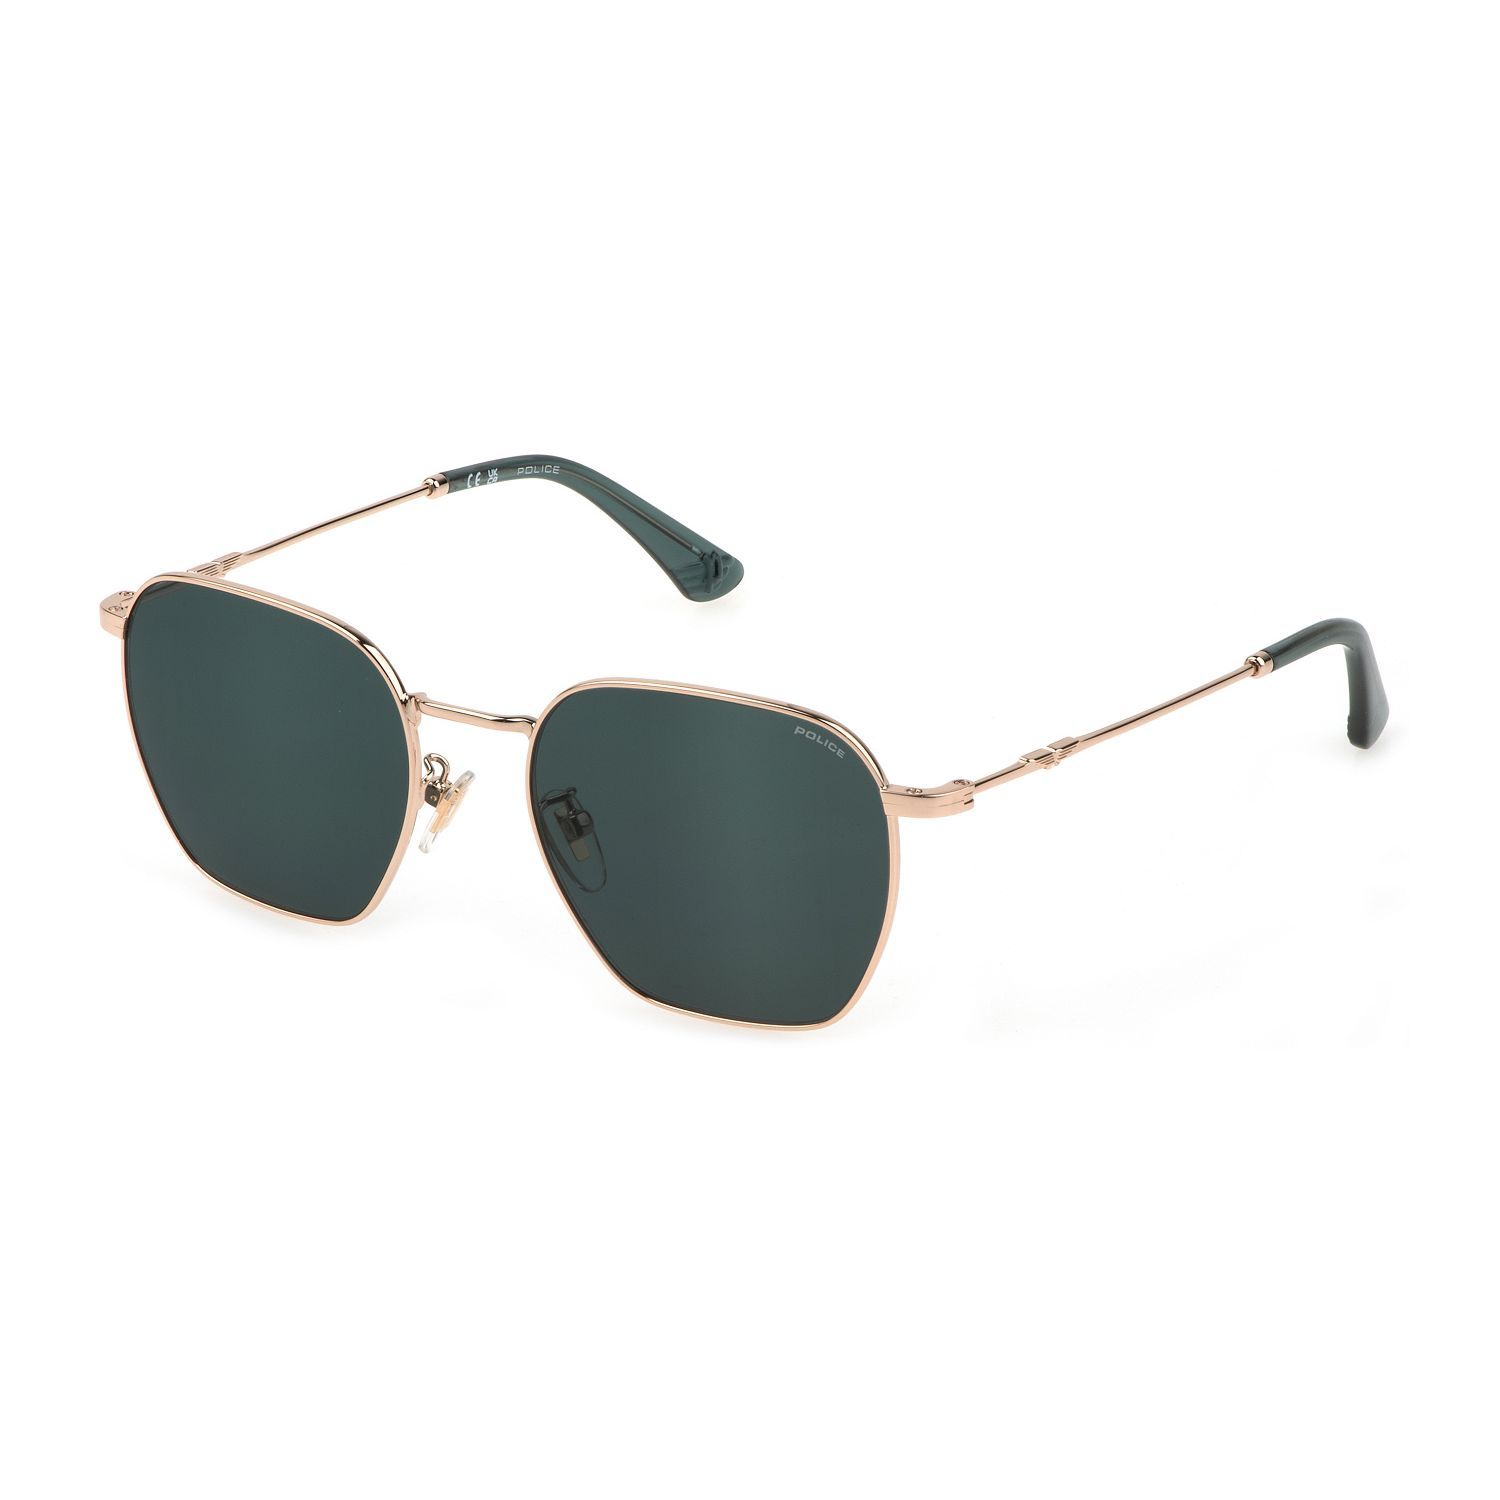 SPLL06M Square Sunglasses 300 - size 54